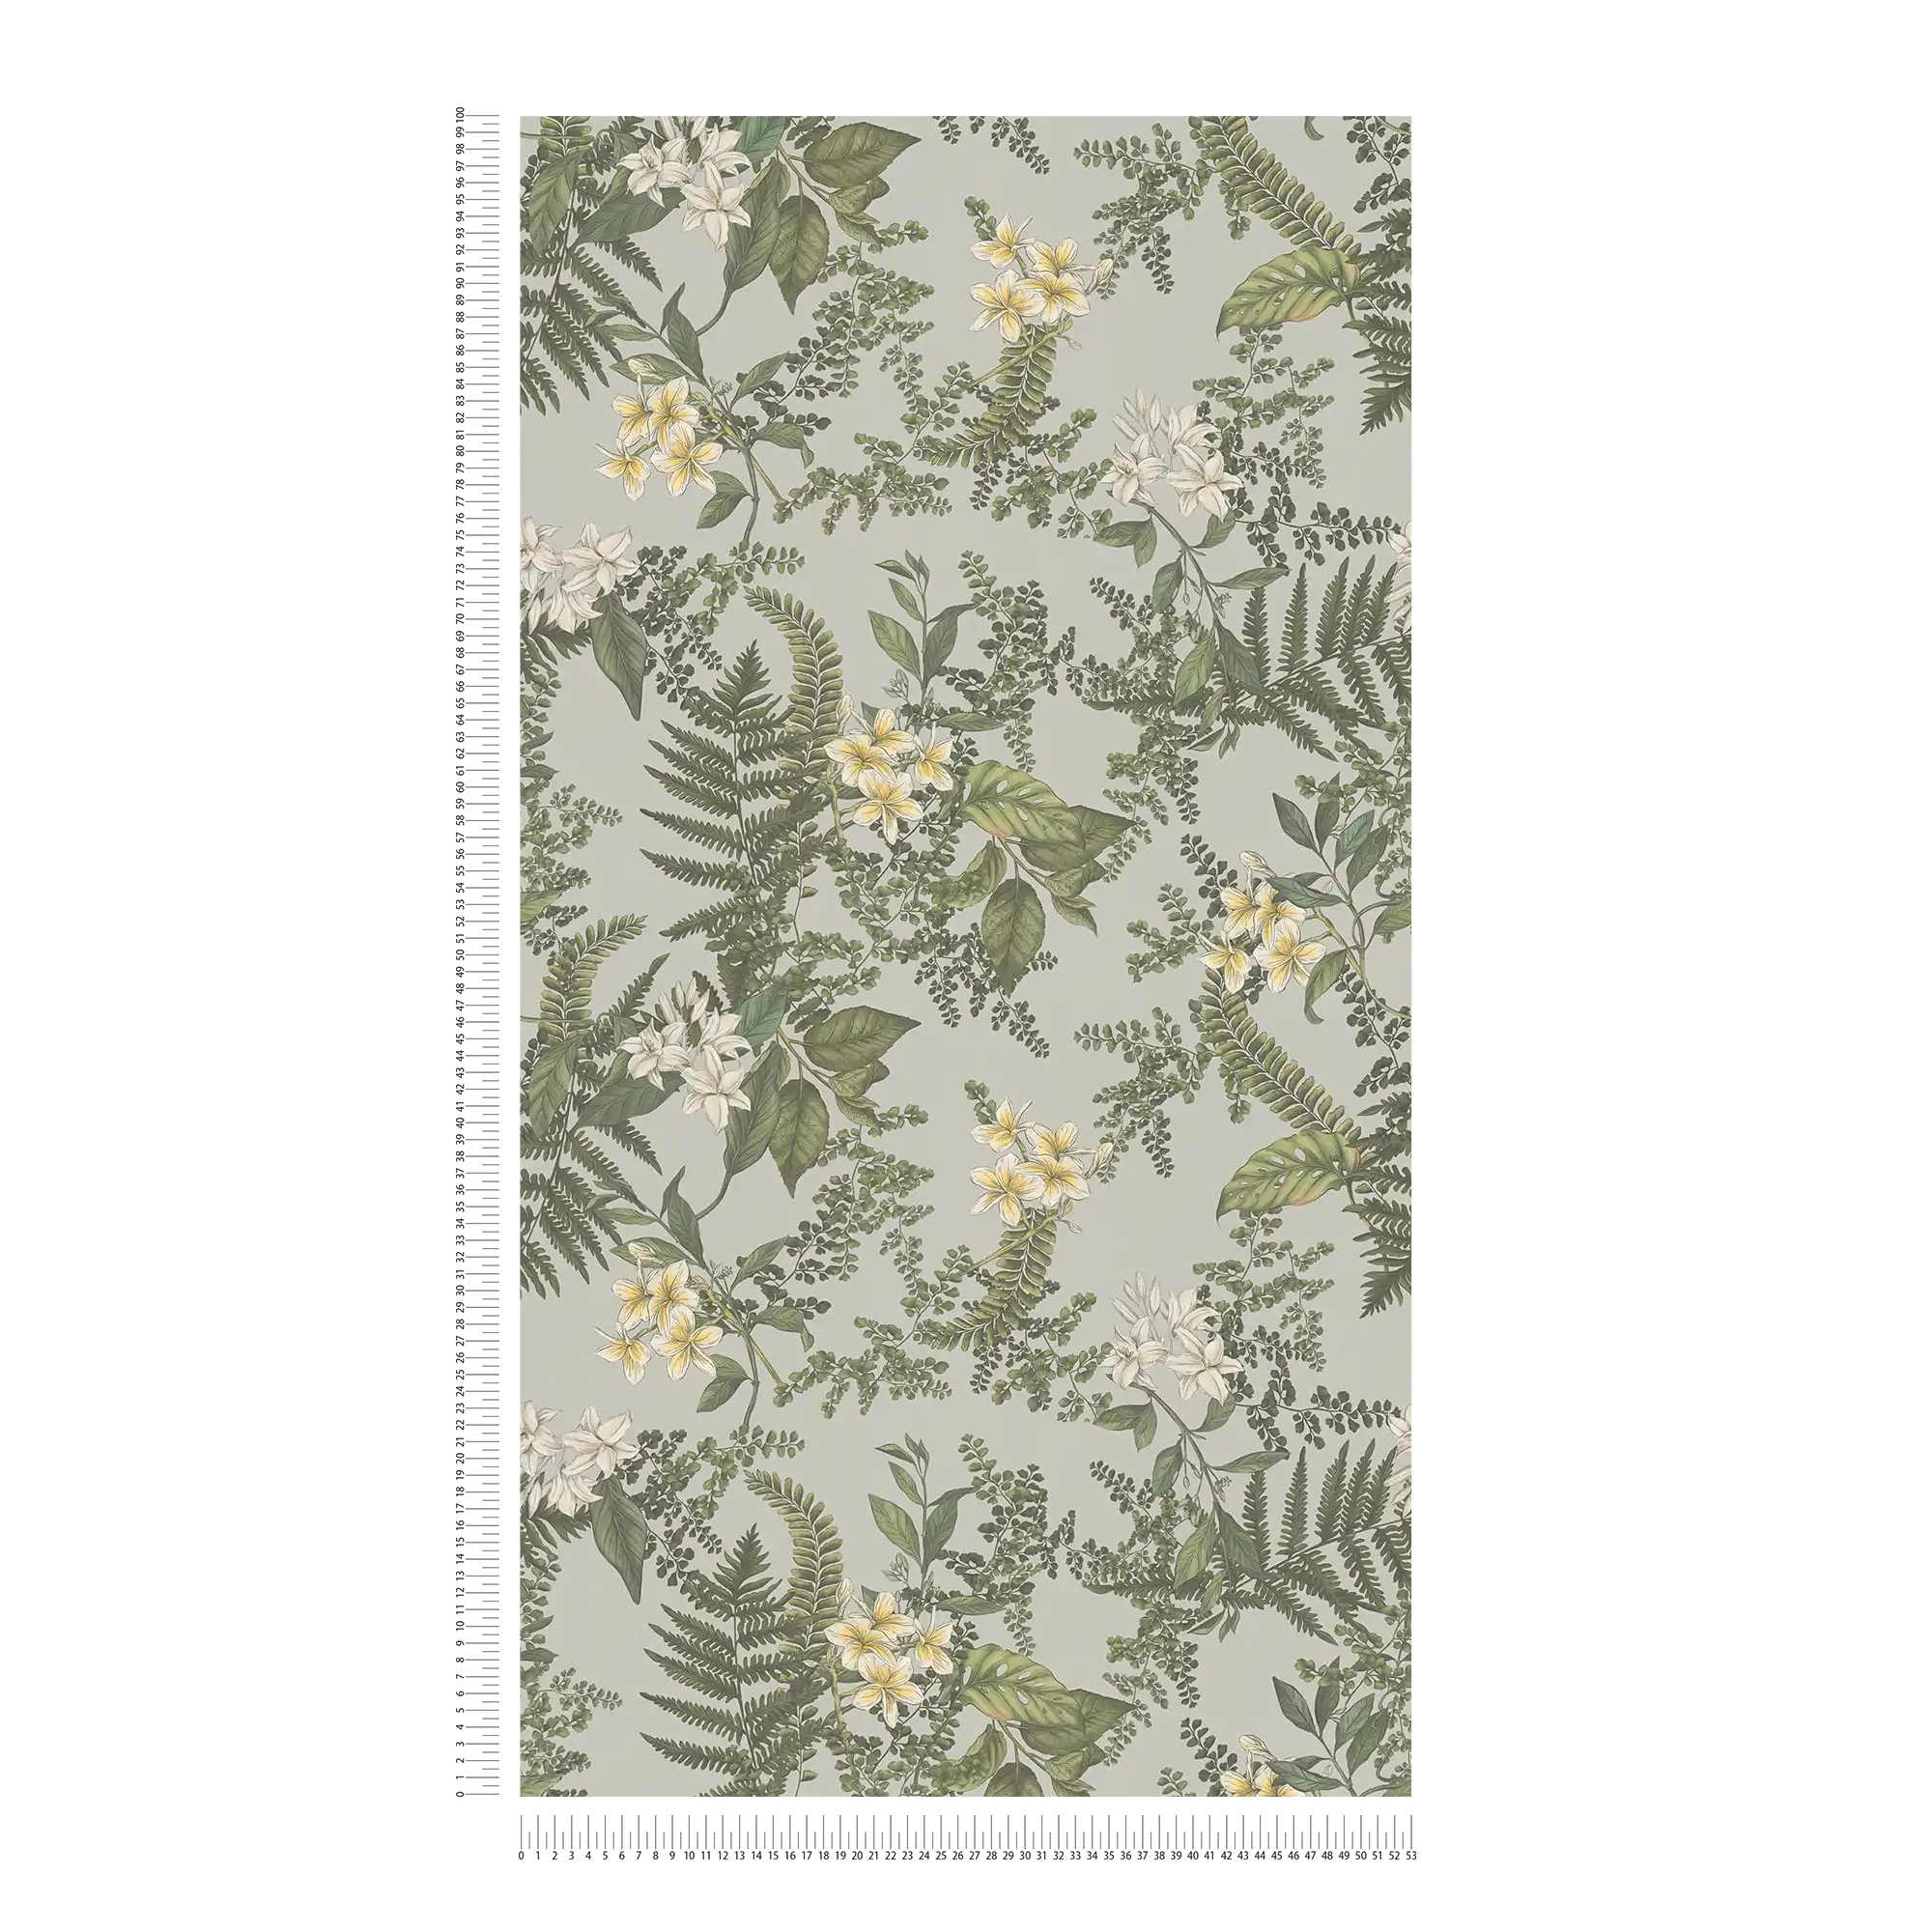             Papel pintado moderno estilo floral con flores y hierbas textura mate - gris, verde oscuro, blanco
        